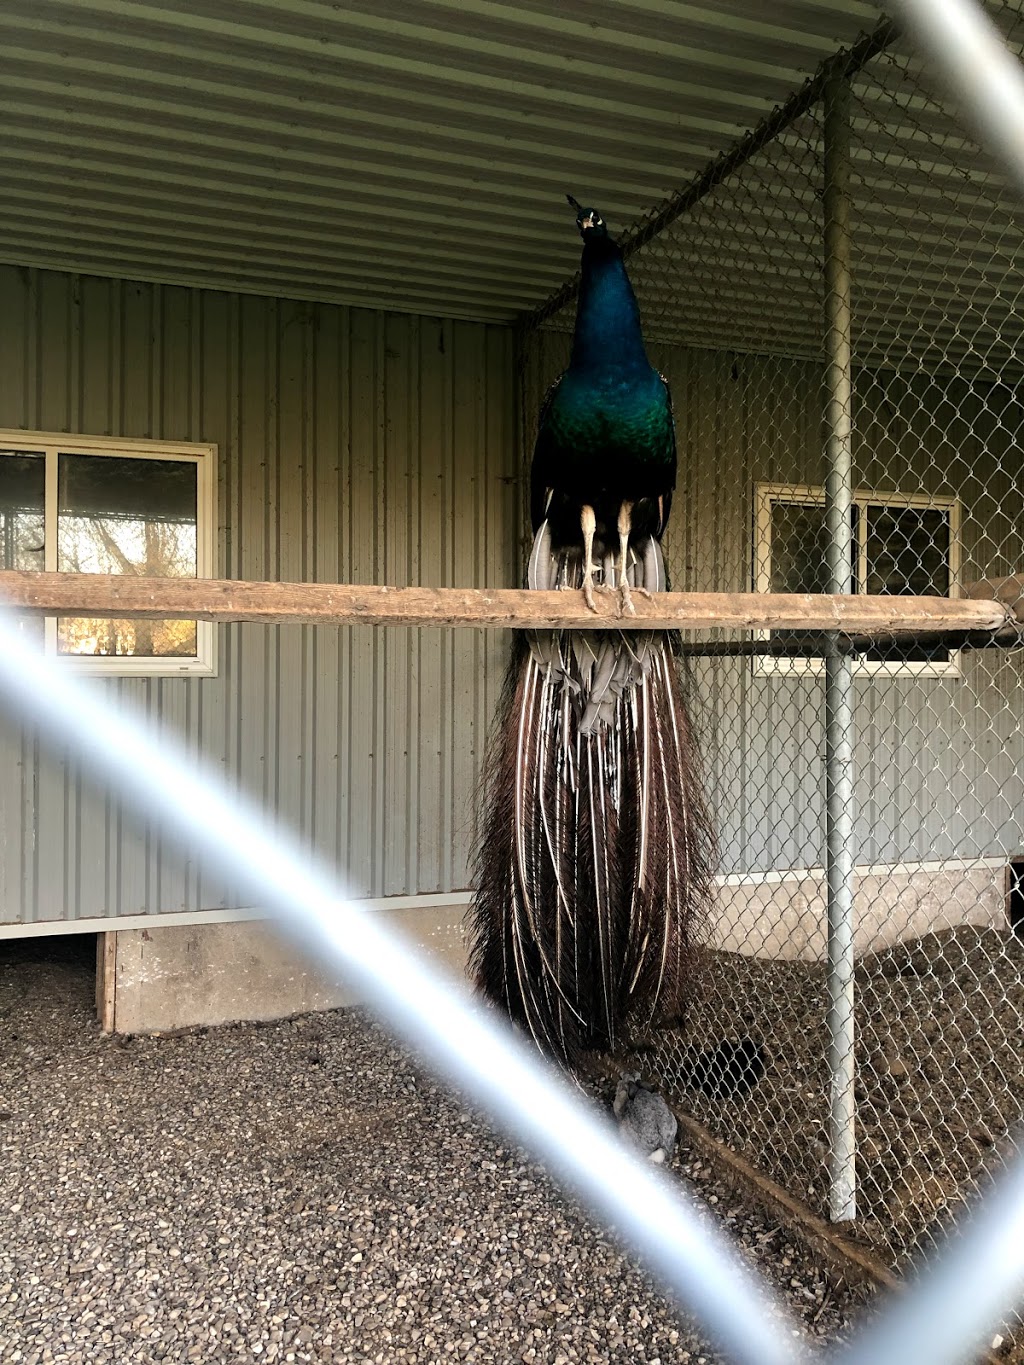 West Perth Animal Park | zoo | Mitchell, ON N0K 1N0, Canada